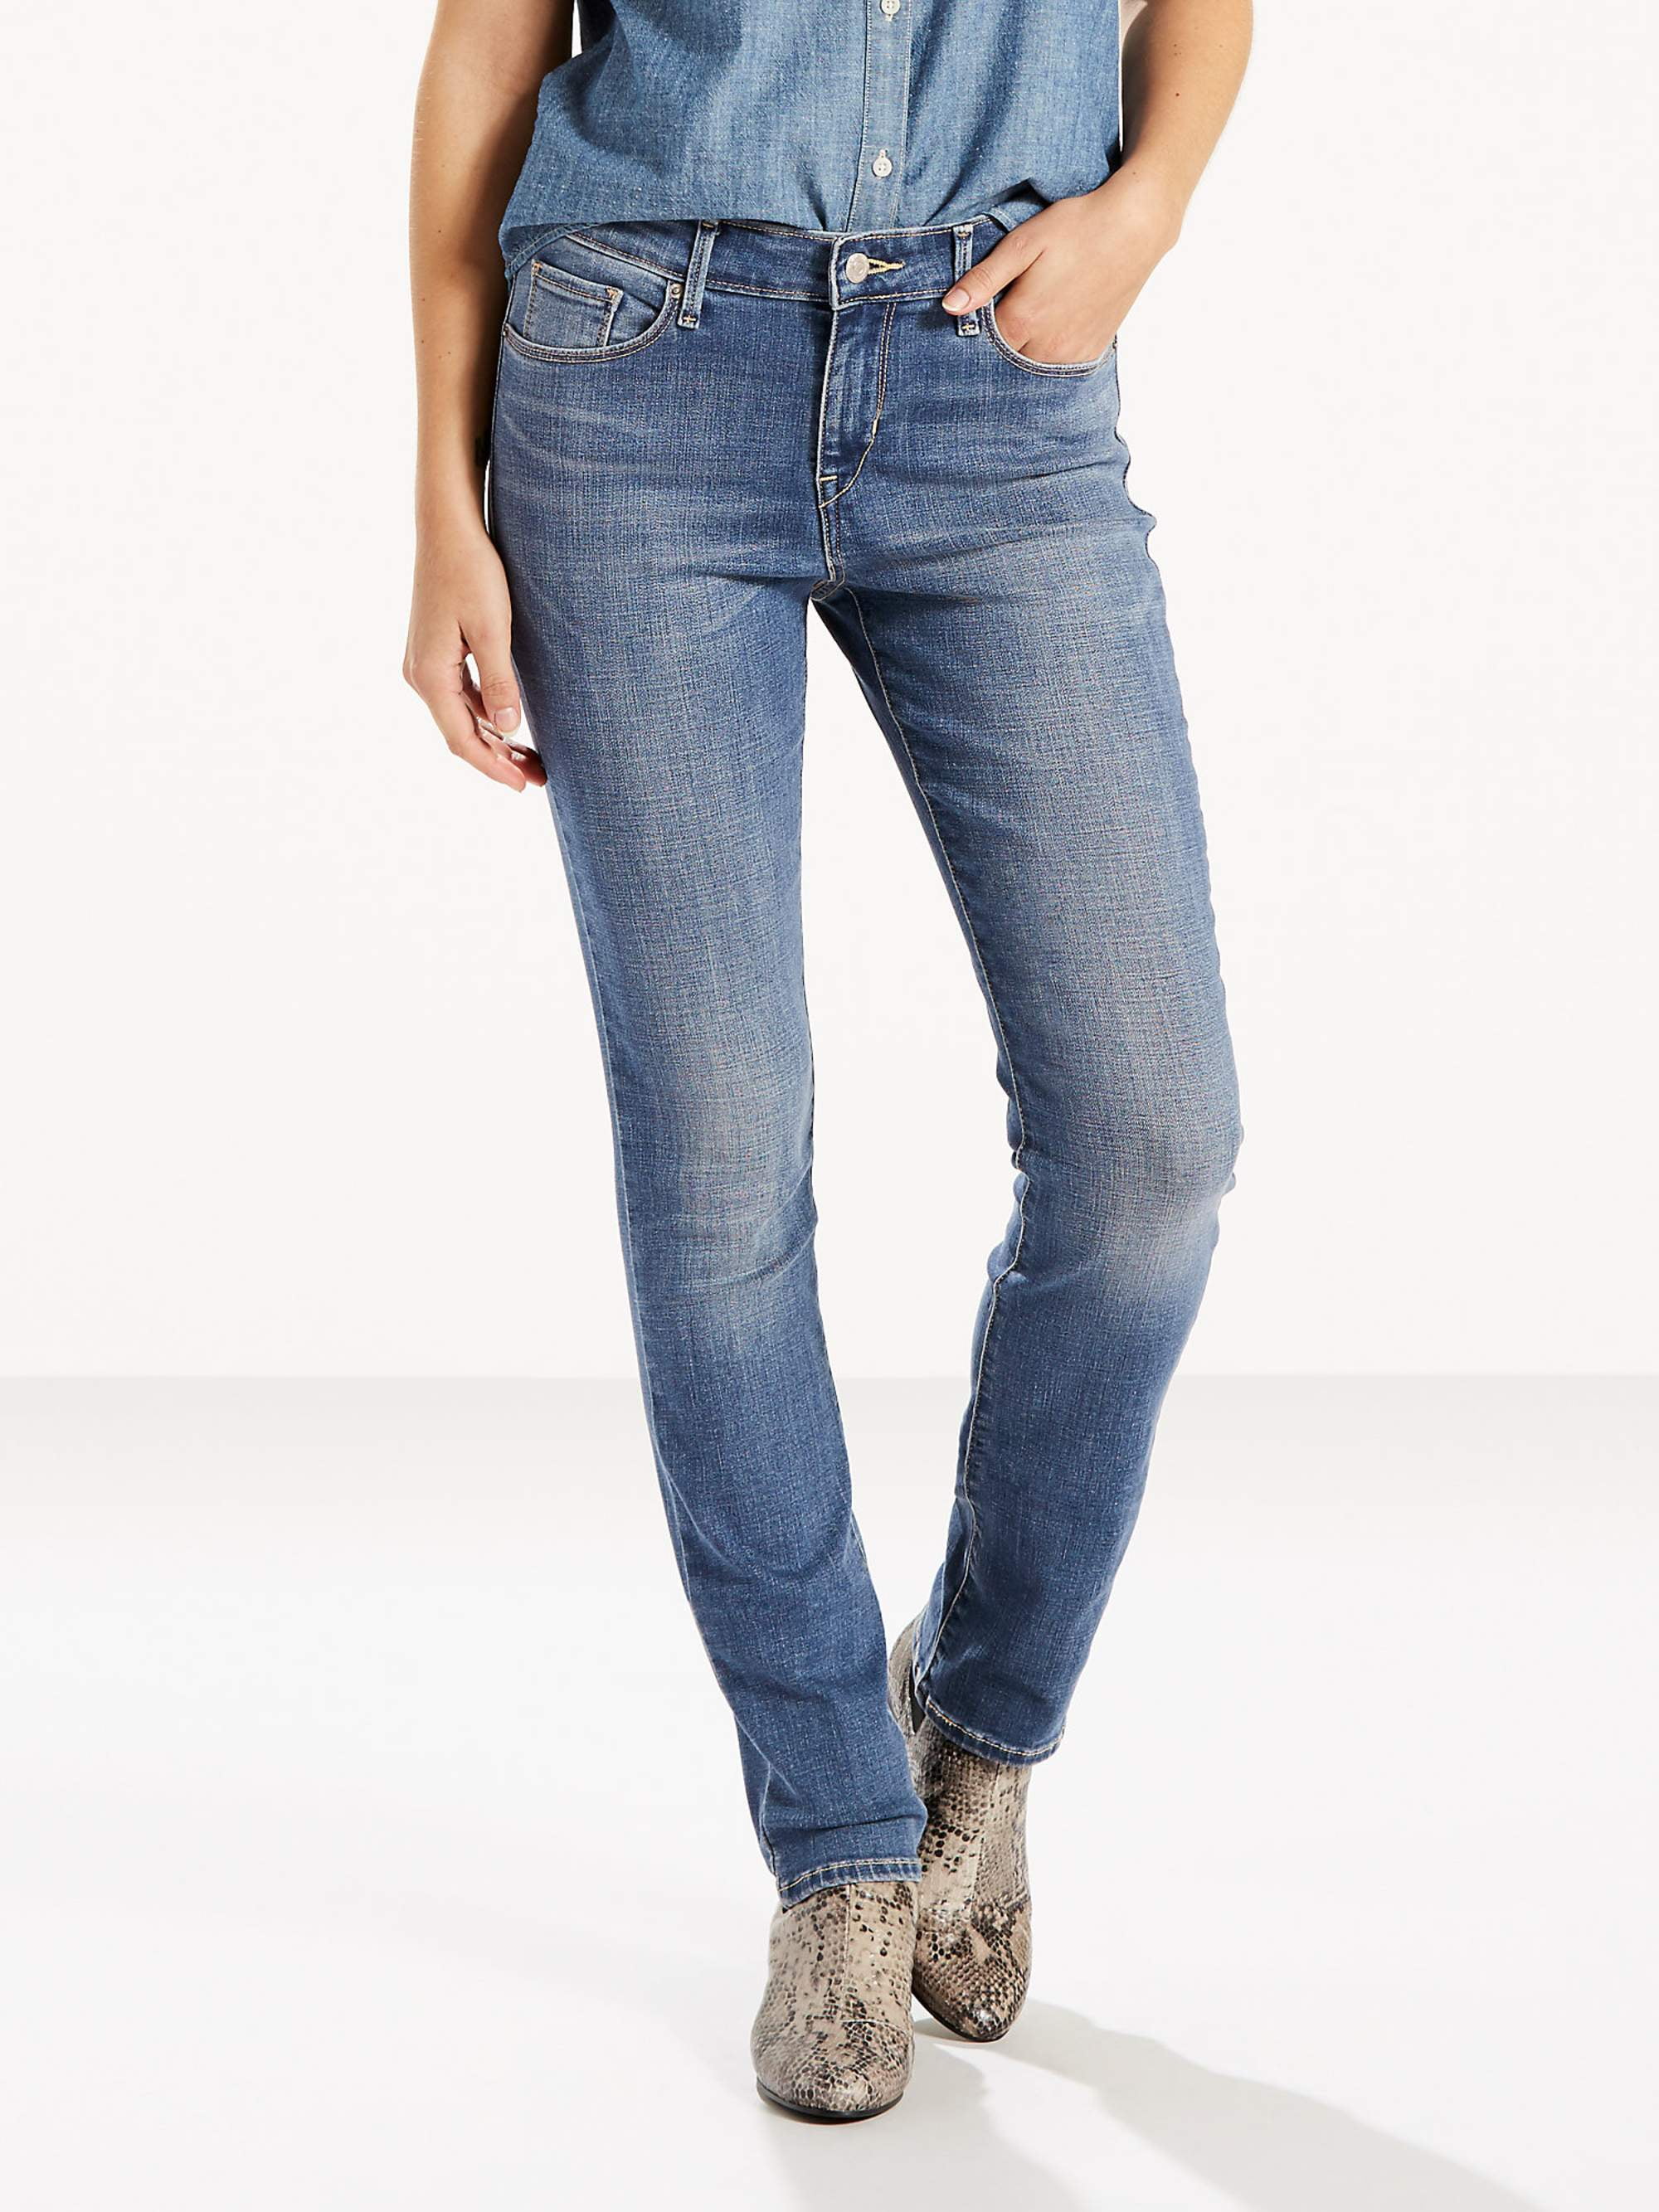 Levi's - Levi's Women's Classic Mid Rise Skinny Jeans - Walmart.com ...